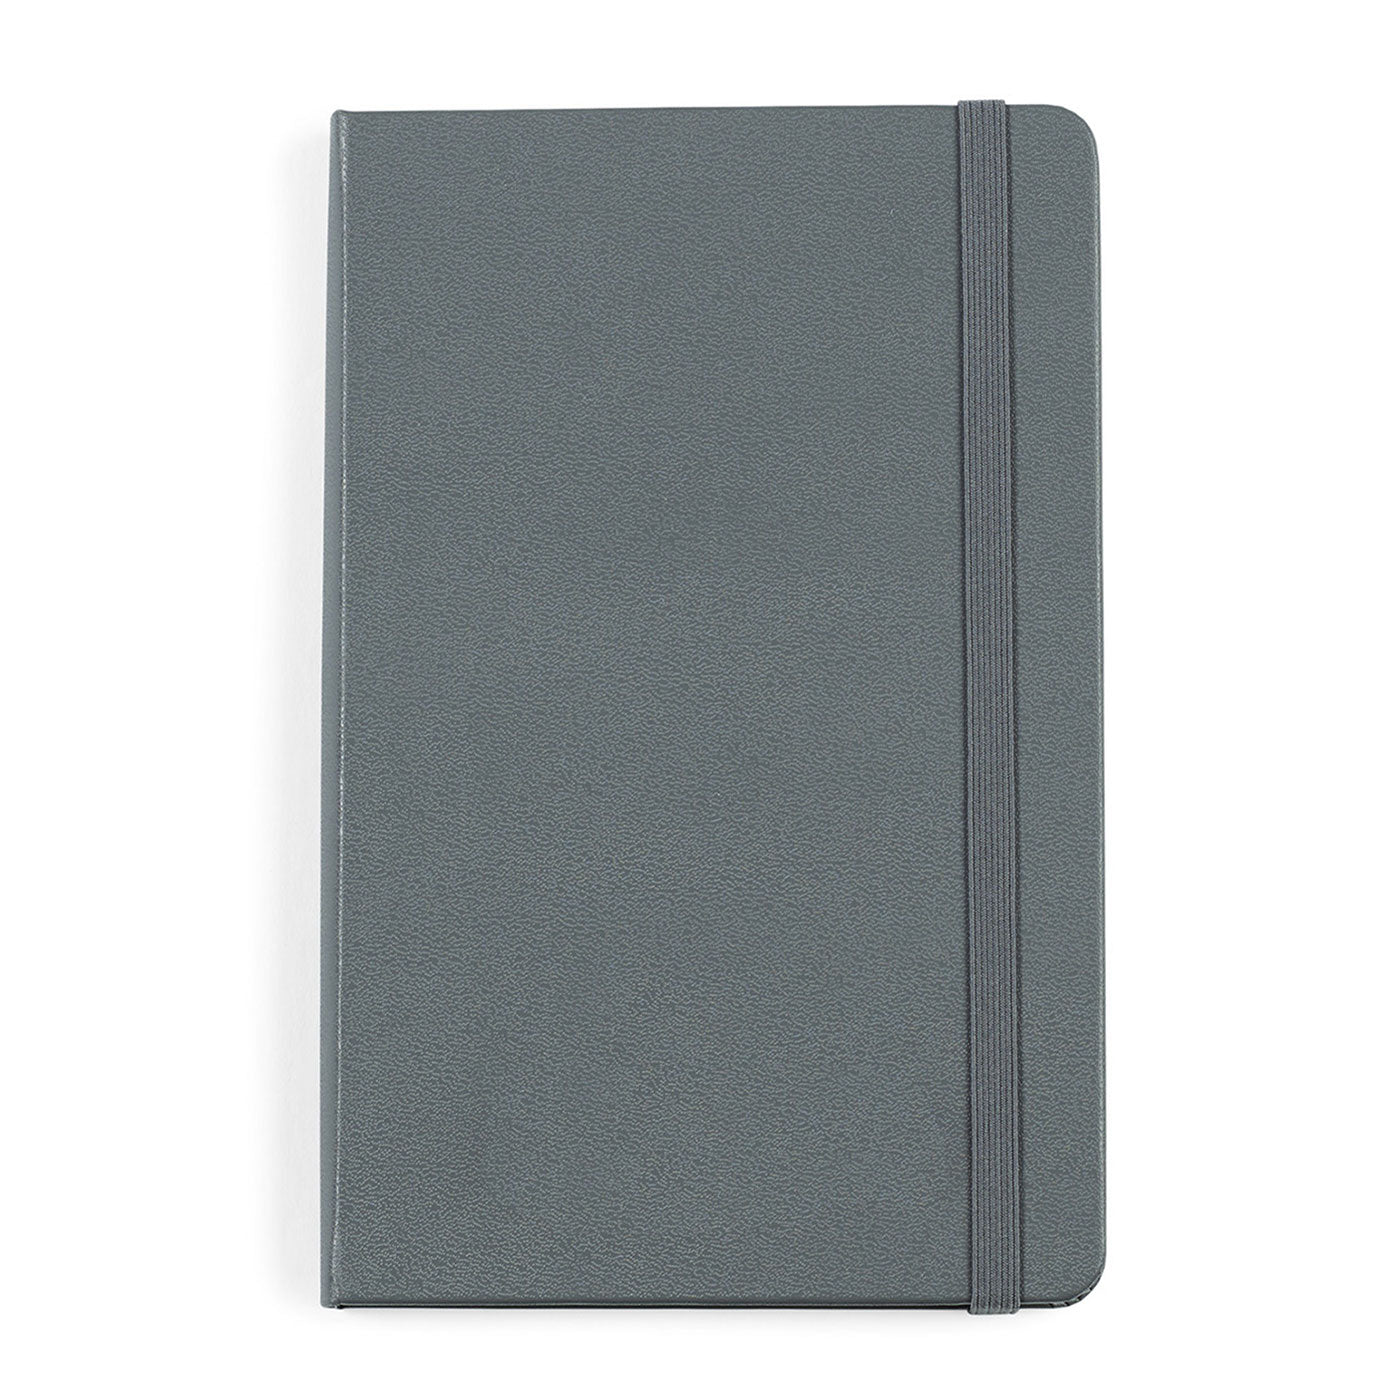 Moleskine Hard Cover Ruled Medium Notebook Slate Grey